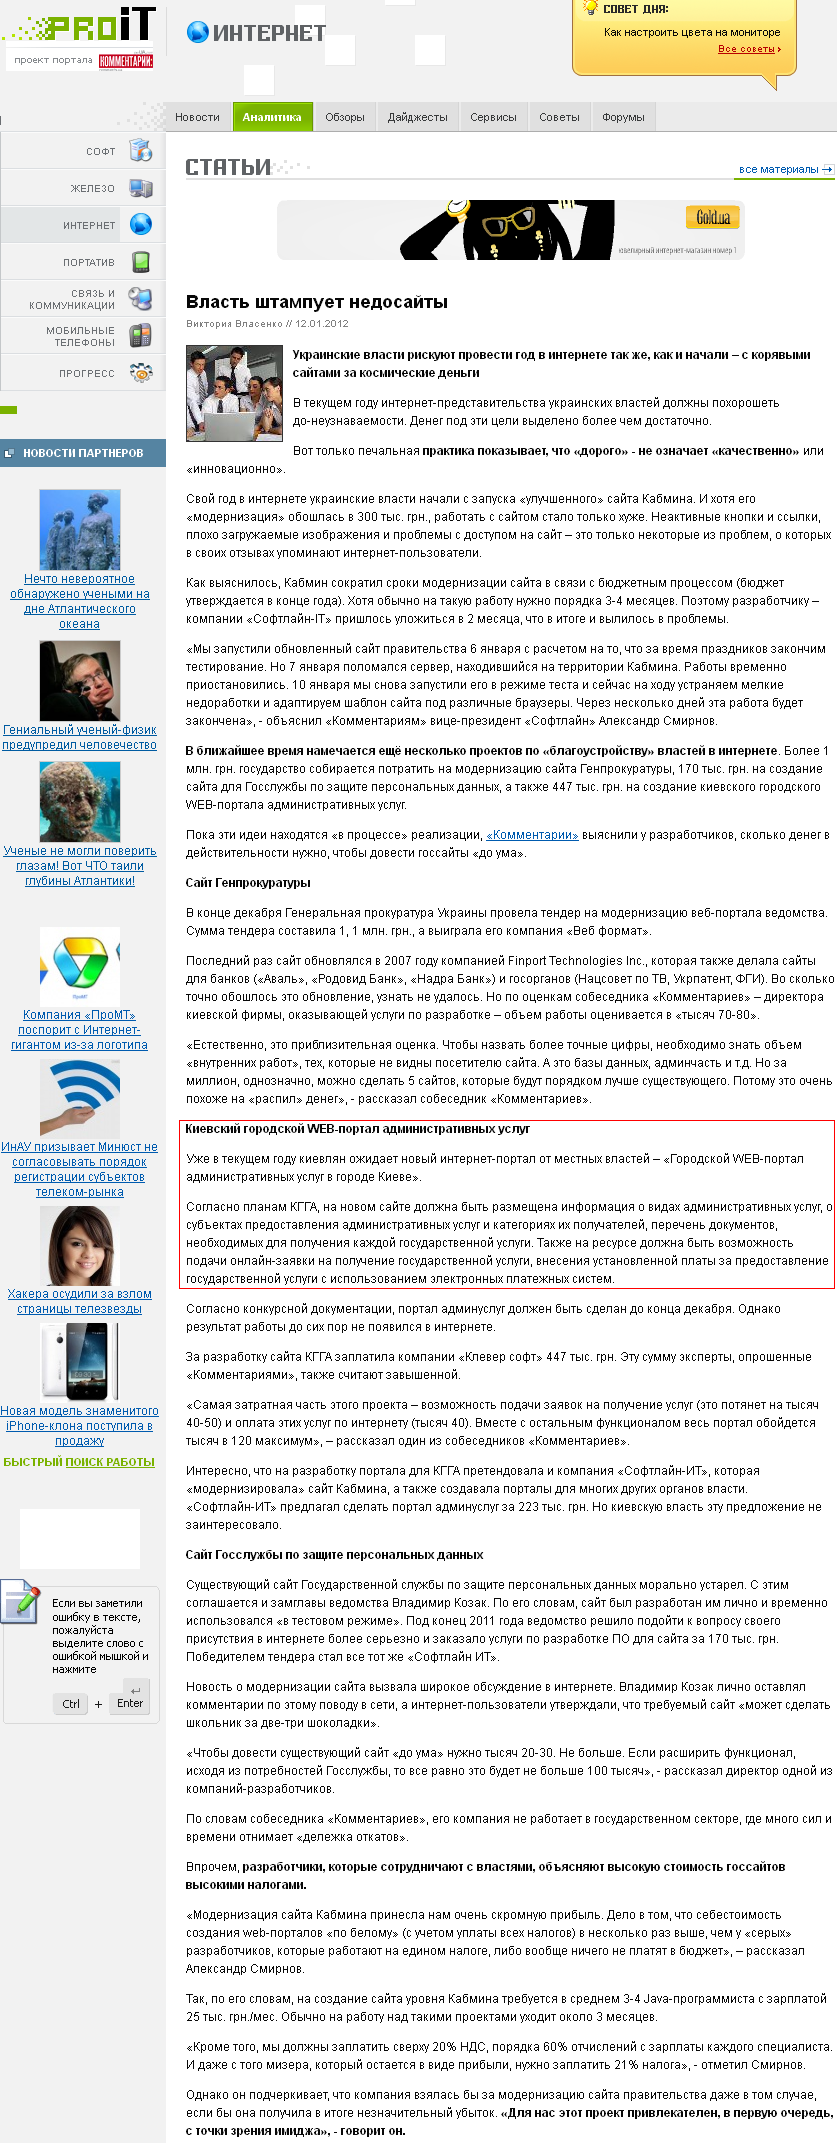 http://www.proit.com.ua/article/internet/2012/01/12/095140.html